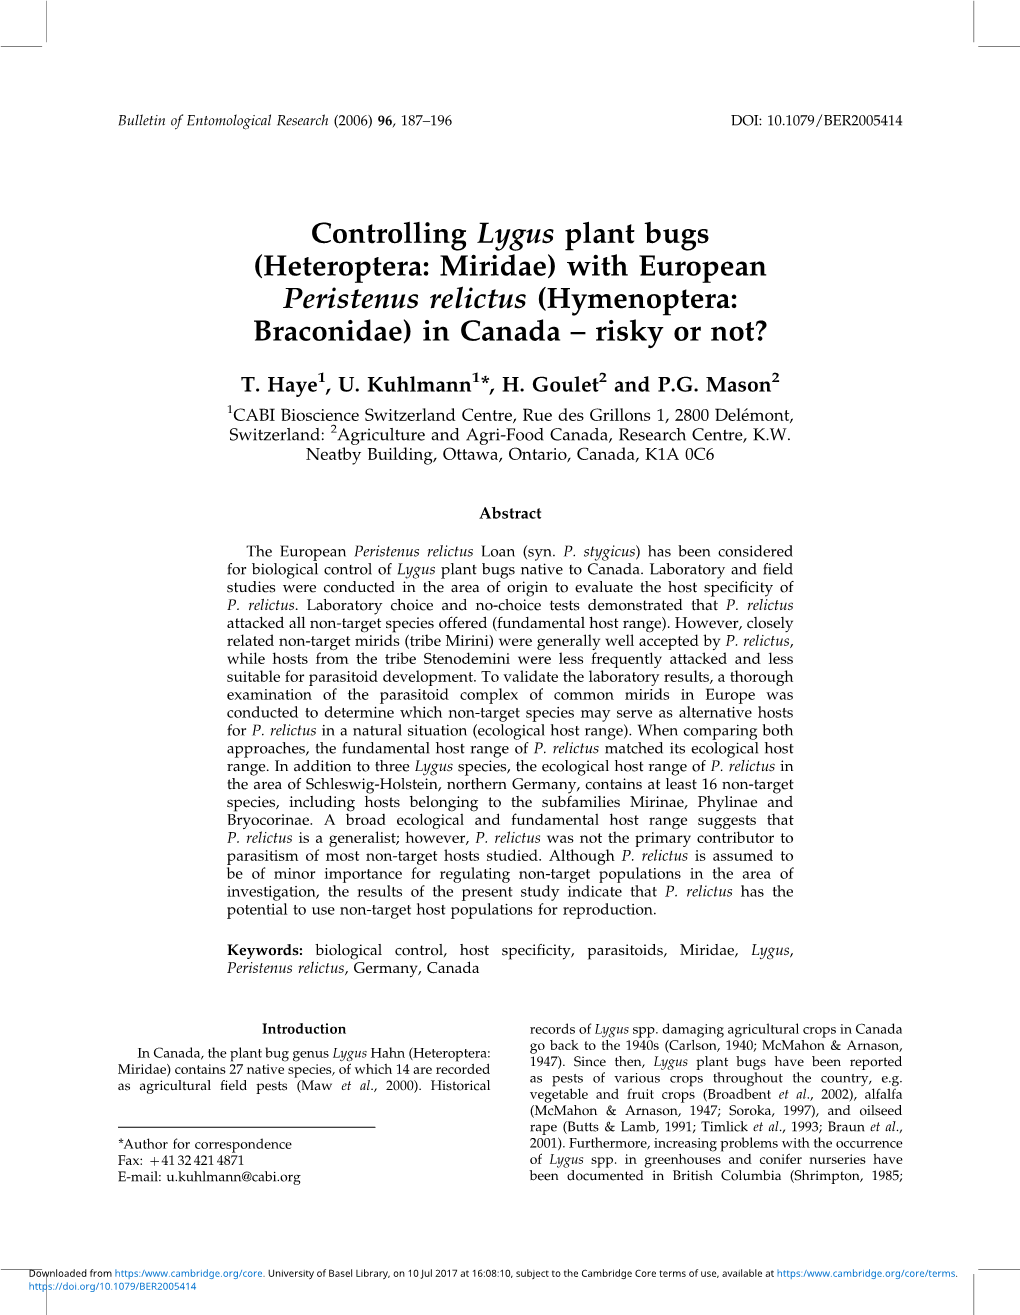 Controlling Lygus Plant Bugs (Heteroptera: Miridae) with European Peristenus Relictus (Hymenoptera: Braconidae) in Canada – Risky Or Not?